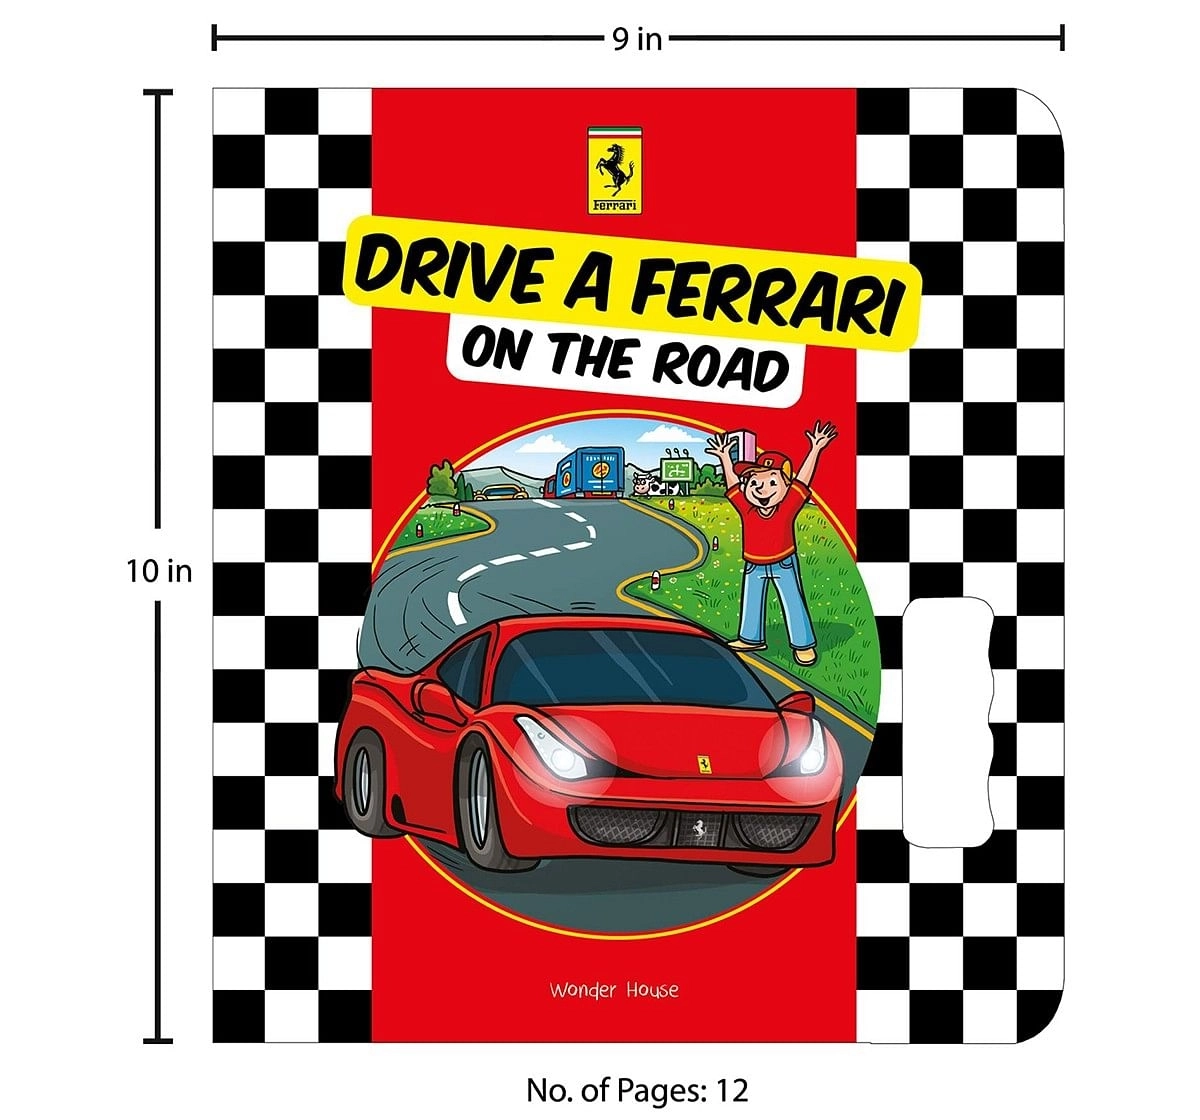 Drive A Ferrari On The Road: Illustrated Board Book, 12 Pages Book By Franco Cosimo Panini, Board Book